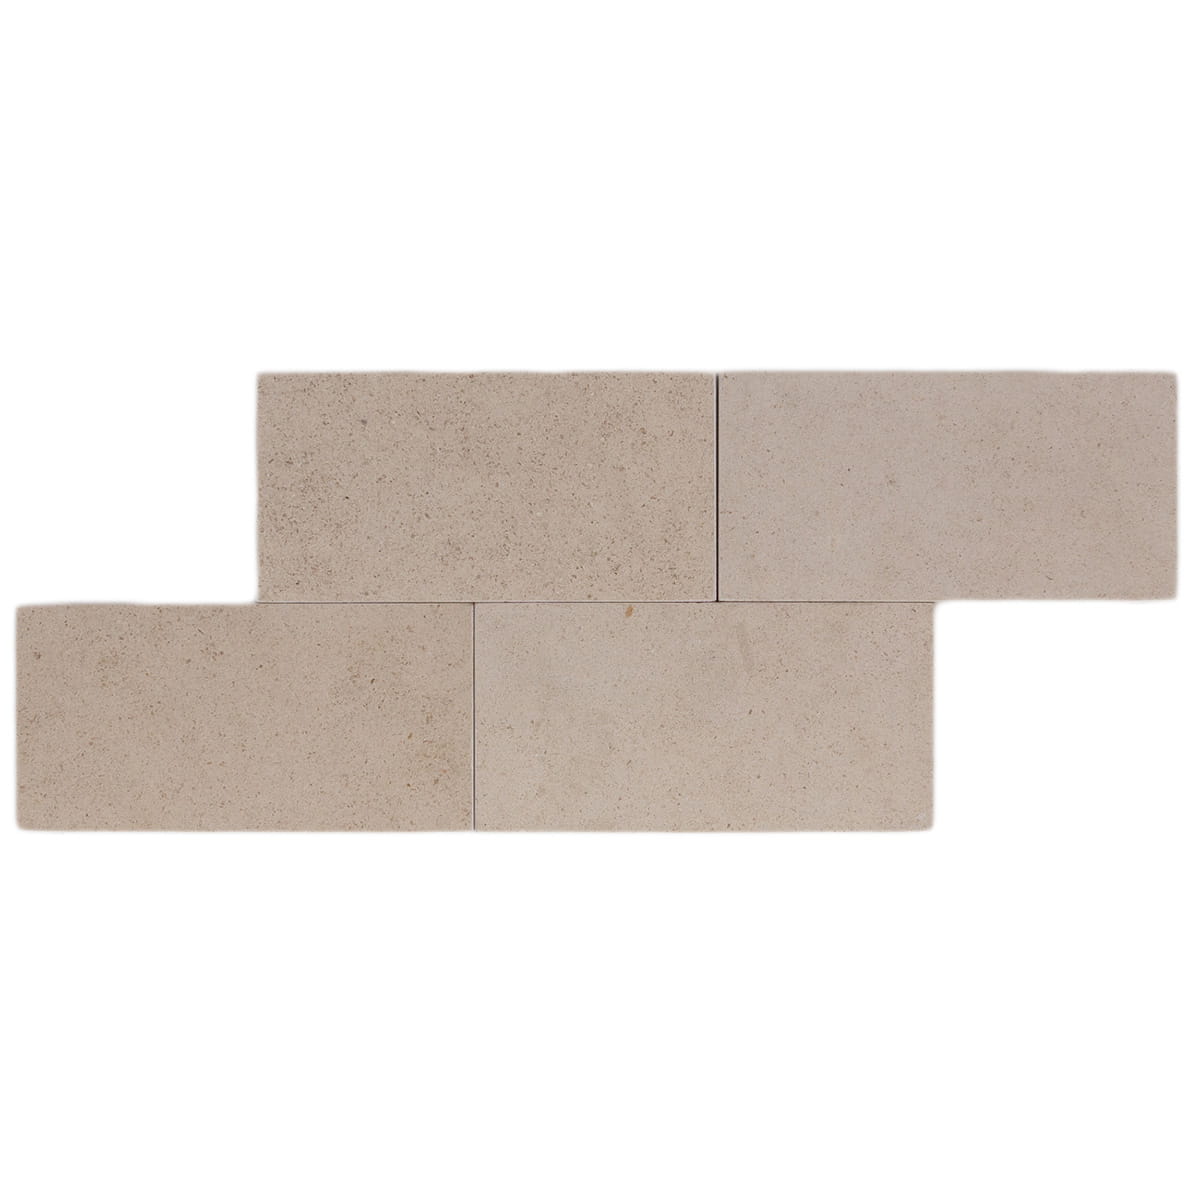 haussmann belair porto beige limestone rectangle natural stone field tile 3x6 honed